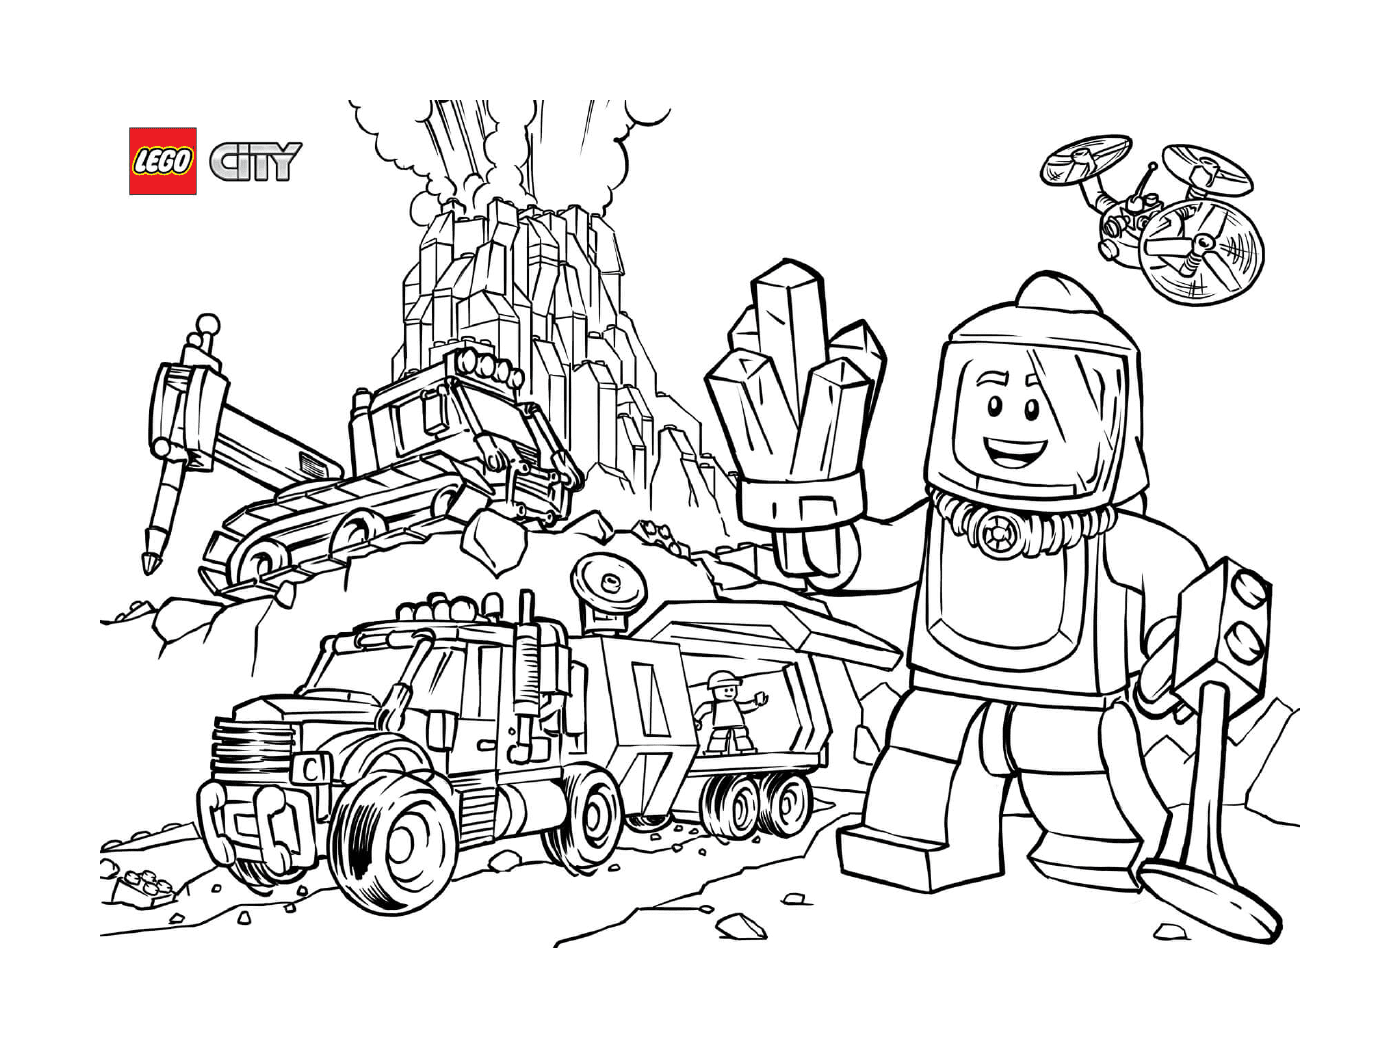  Explorers of the Lego City Volcano 